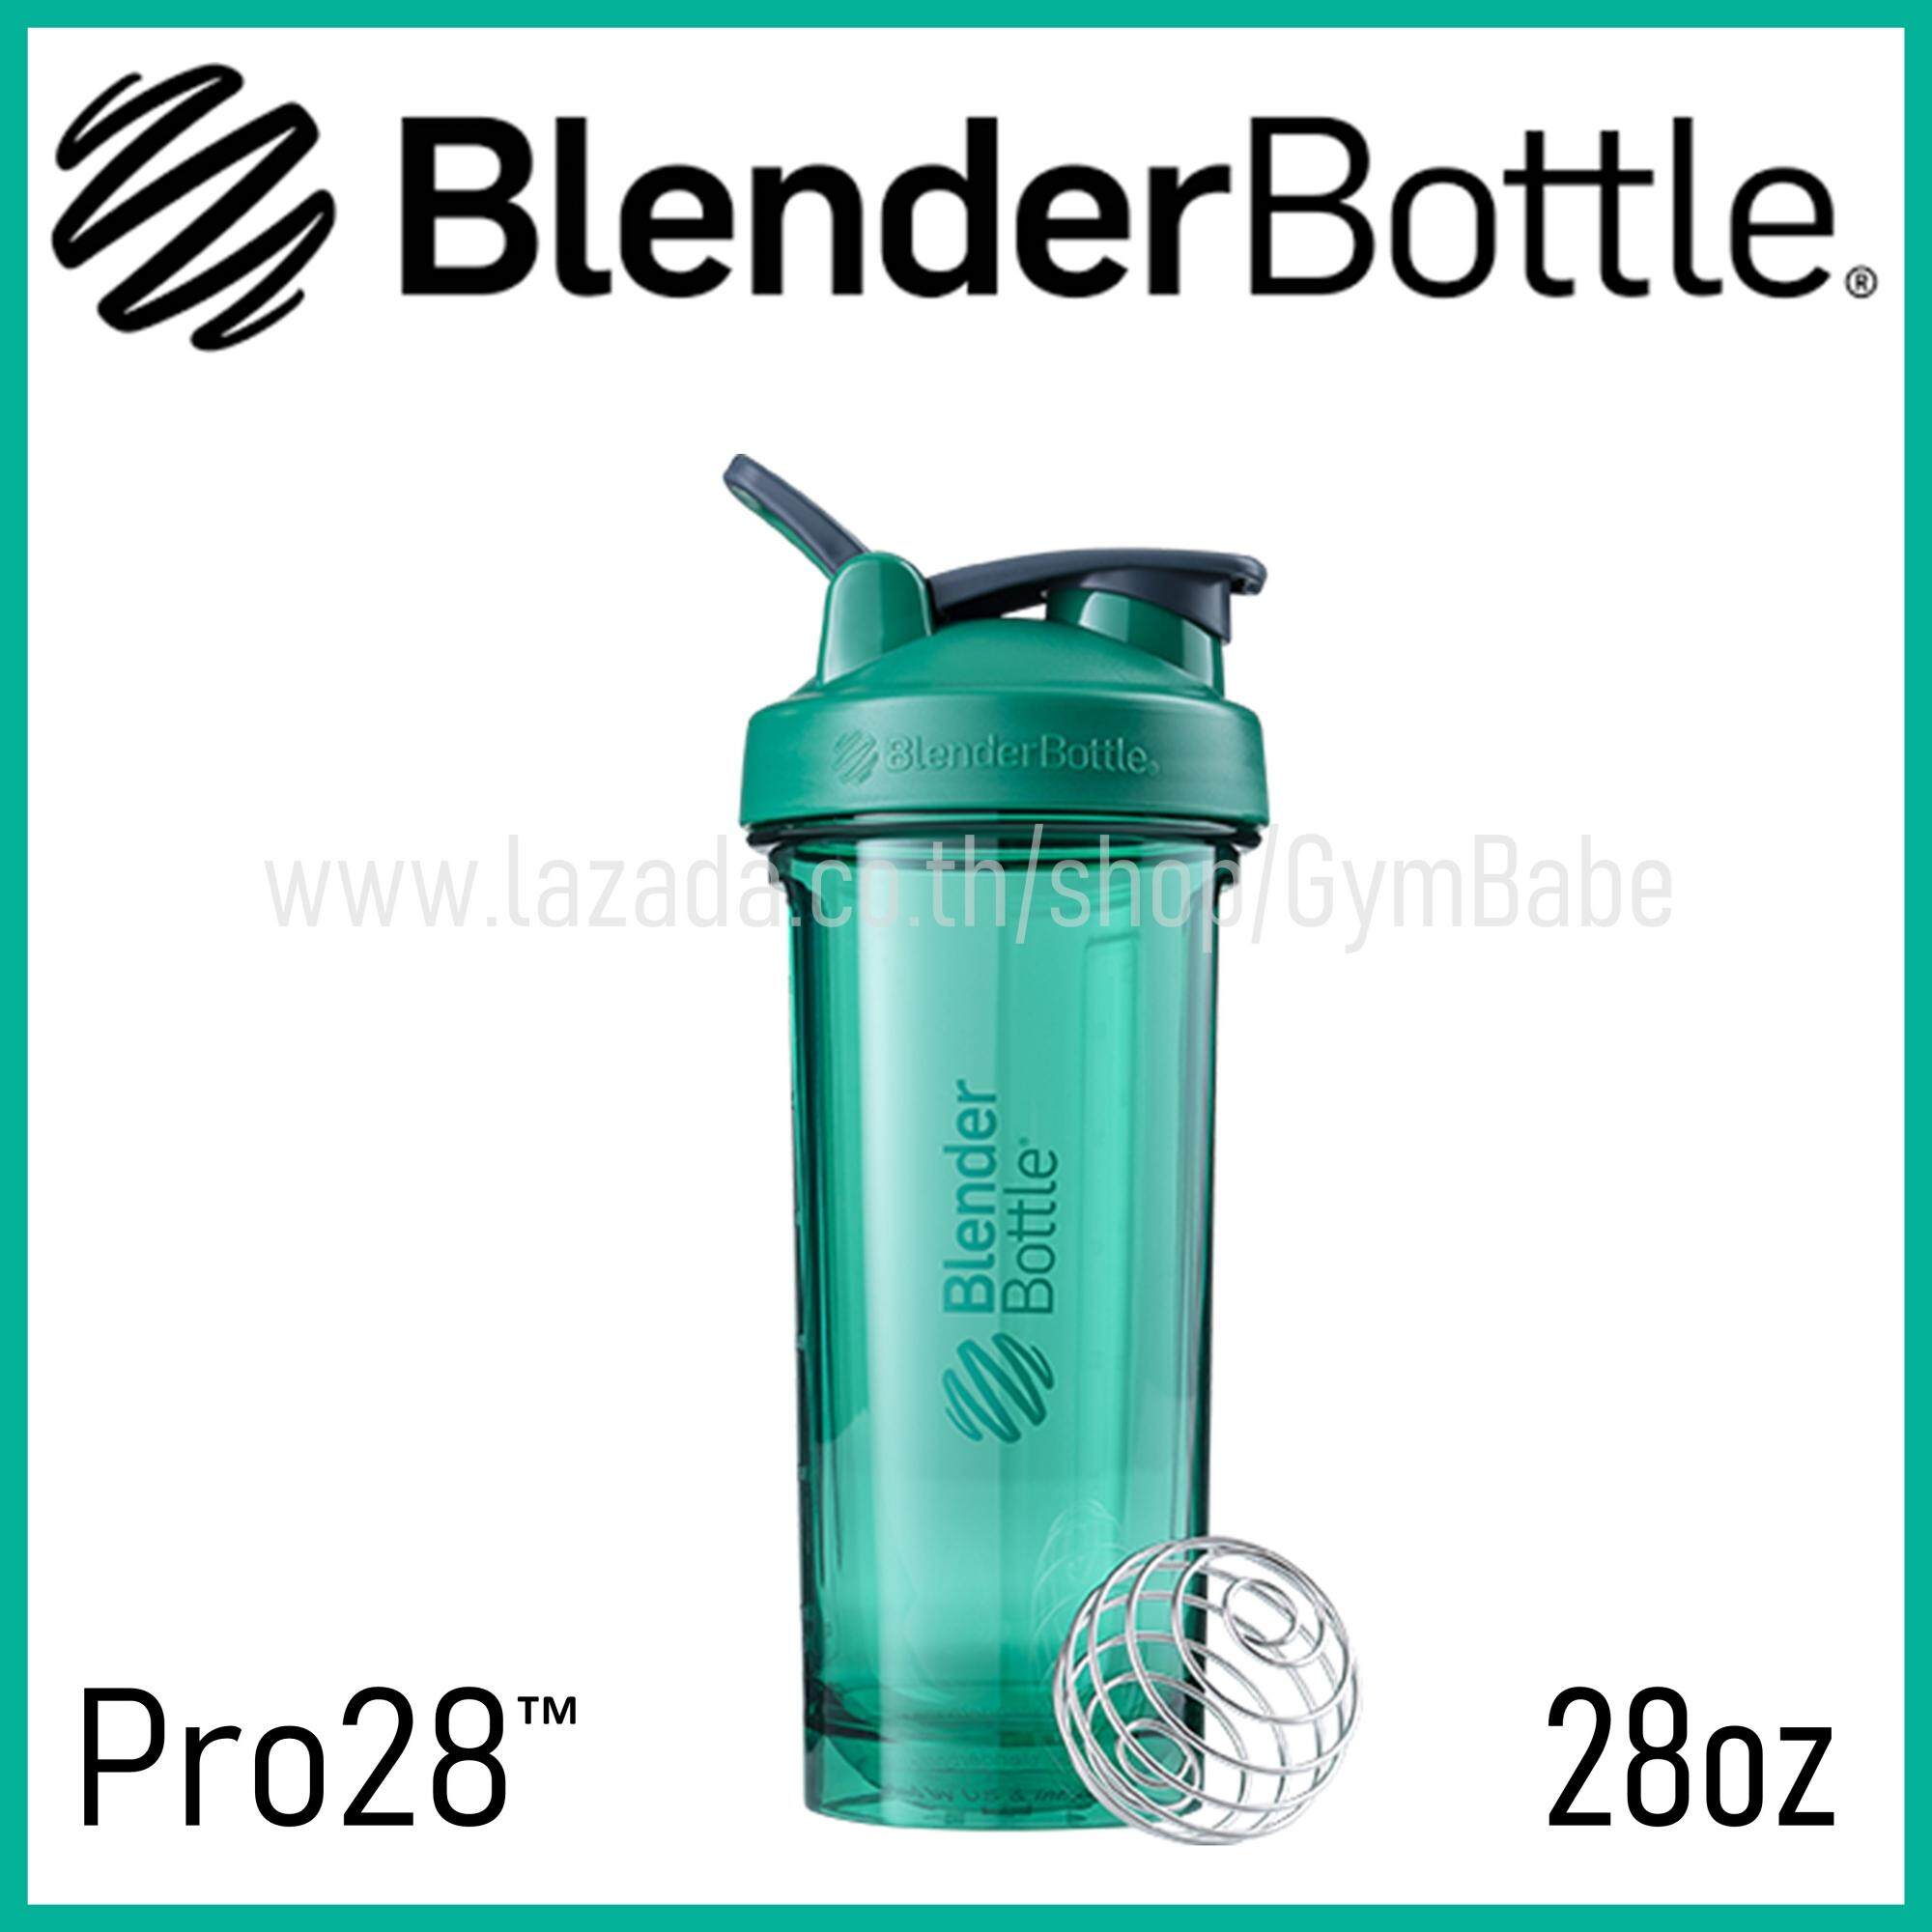 (Pro28) แก้วเชค BlenderBottle รุ่น Pro Series ขนาด 28oz แก้วShake Blender Bottle ของแท้